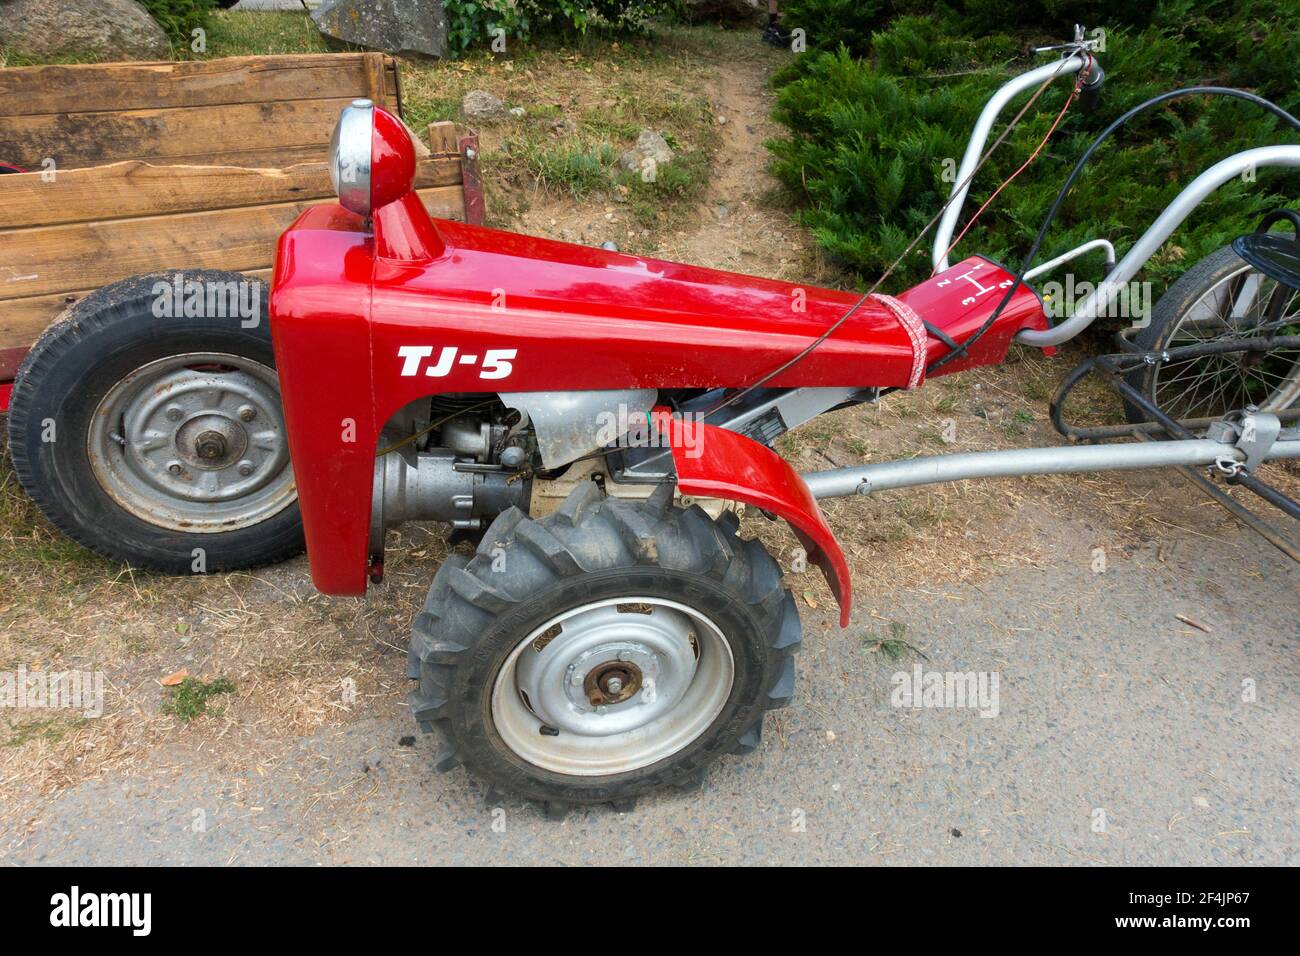 Czechoslovakia product from 70s, small unixial tractor TJ-5 Agrostroj Stock Photo